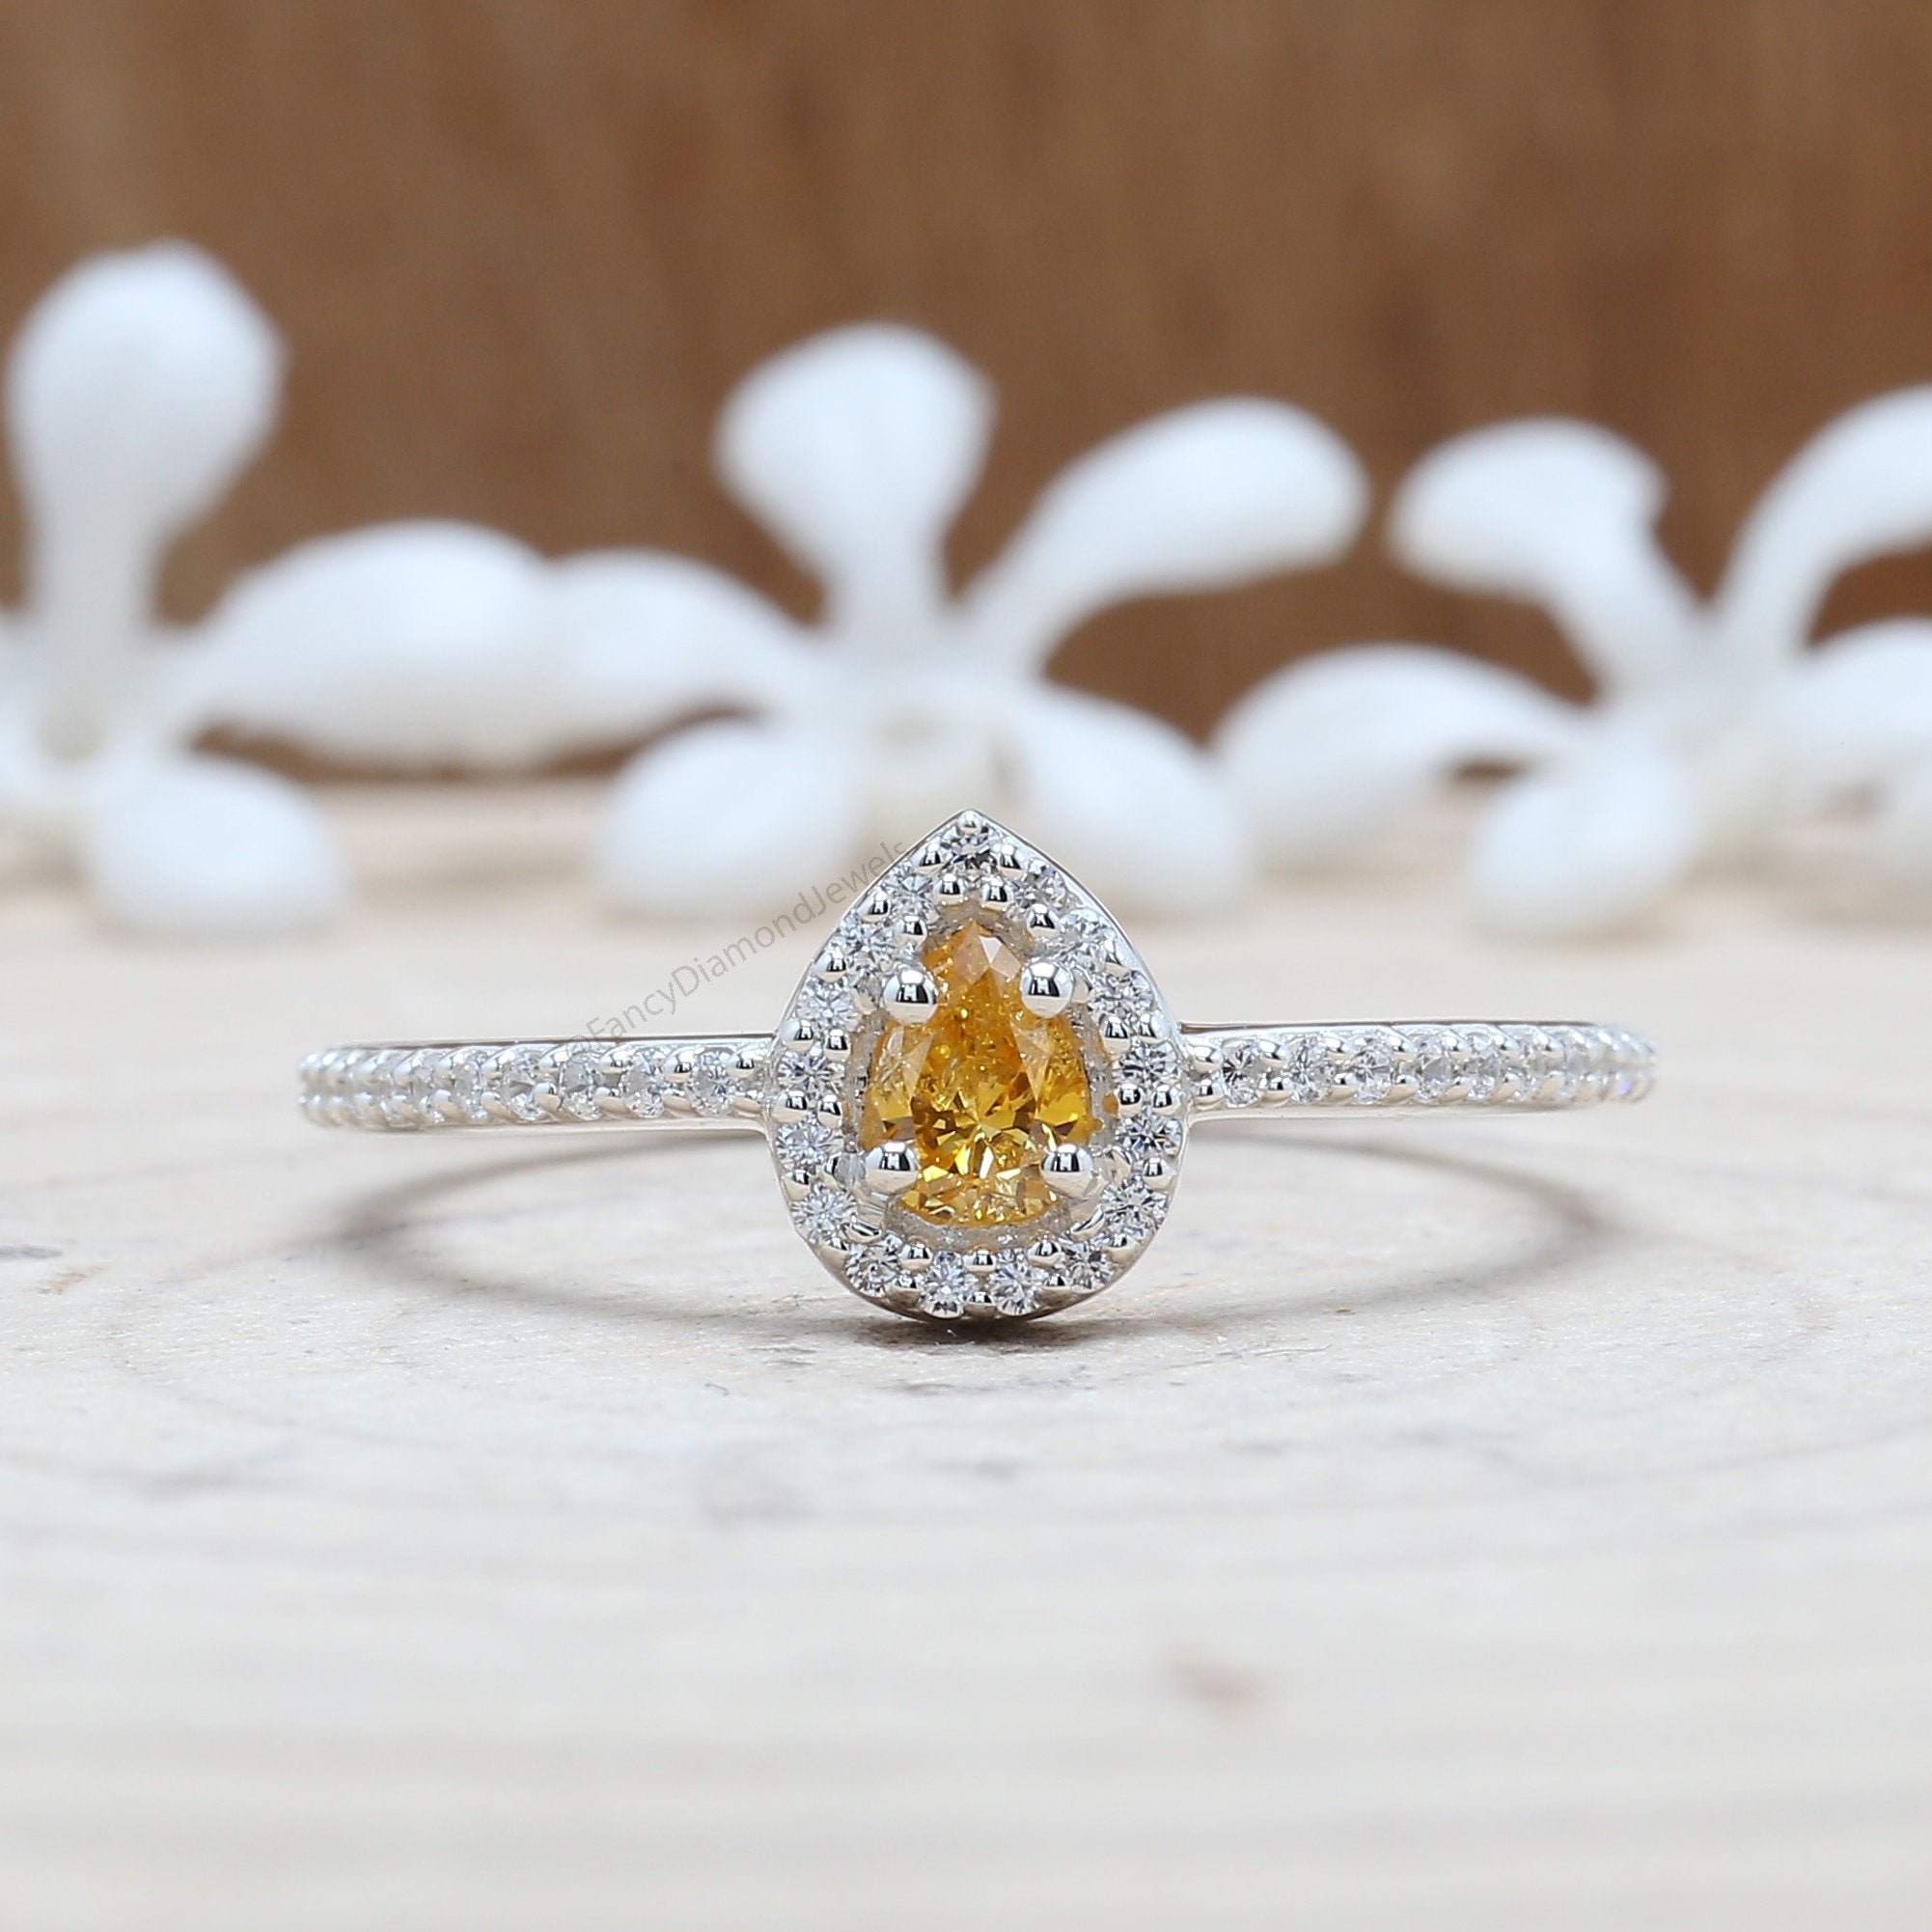 Orange Pear Diamond 14K Solid Rose Yellow White Gold Ring Engagement Wedding Gift Ring KDL5669